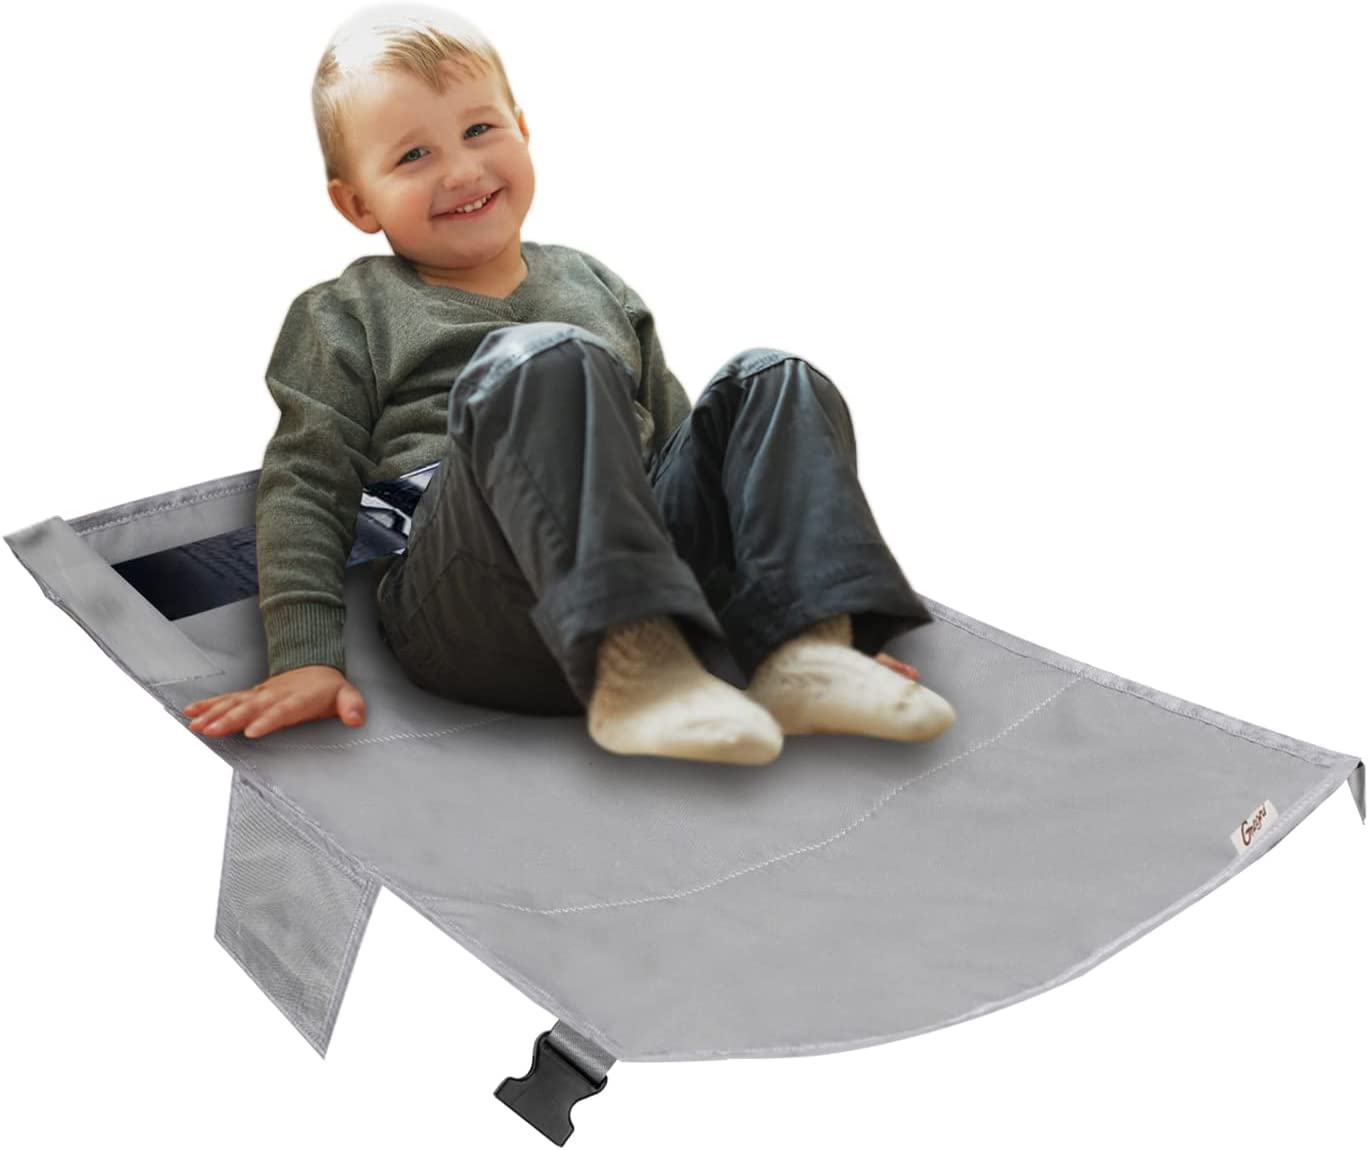 Kids Airplane Footrest – Stackingtoys